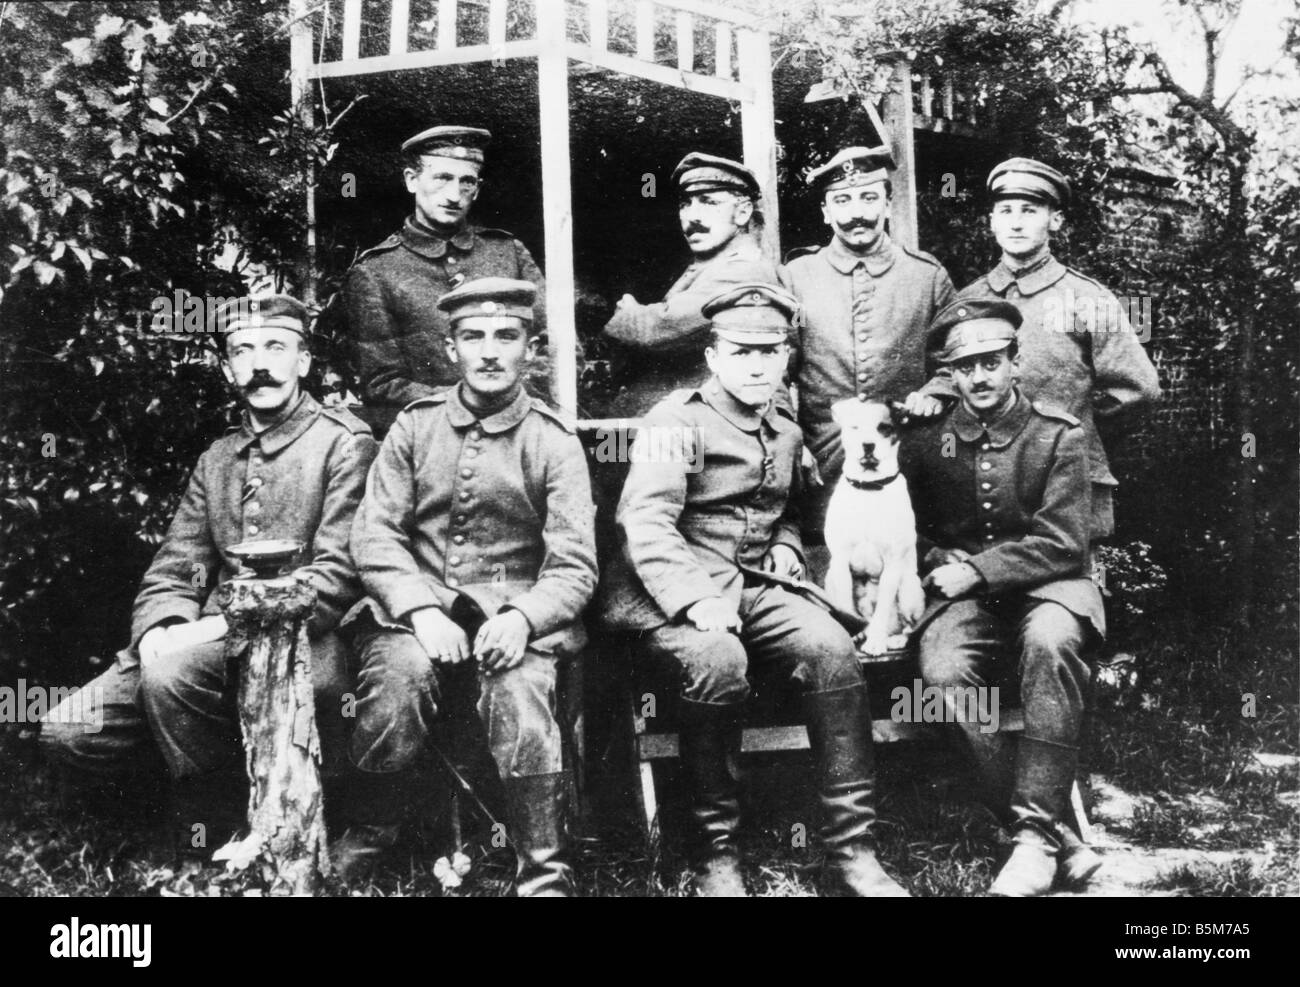 1 H76 F1916 1 E Hitler with fellow soldiers c 1916 Hitler Adolf Dictator NSDAP Braunau 20 4 1889 Berlin suicide 30 4 1945 Hitler Stock Photo